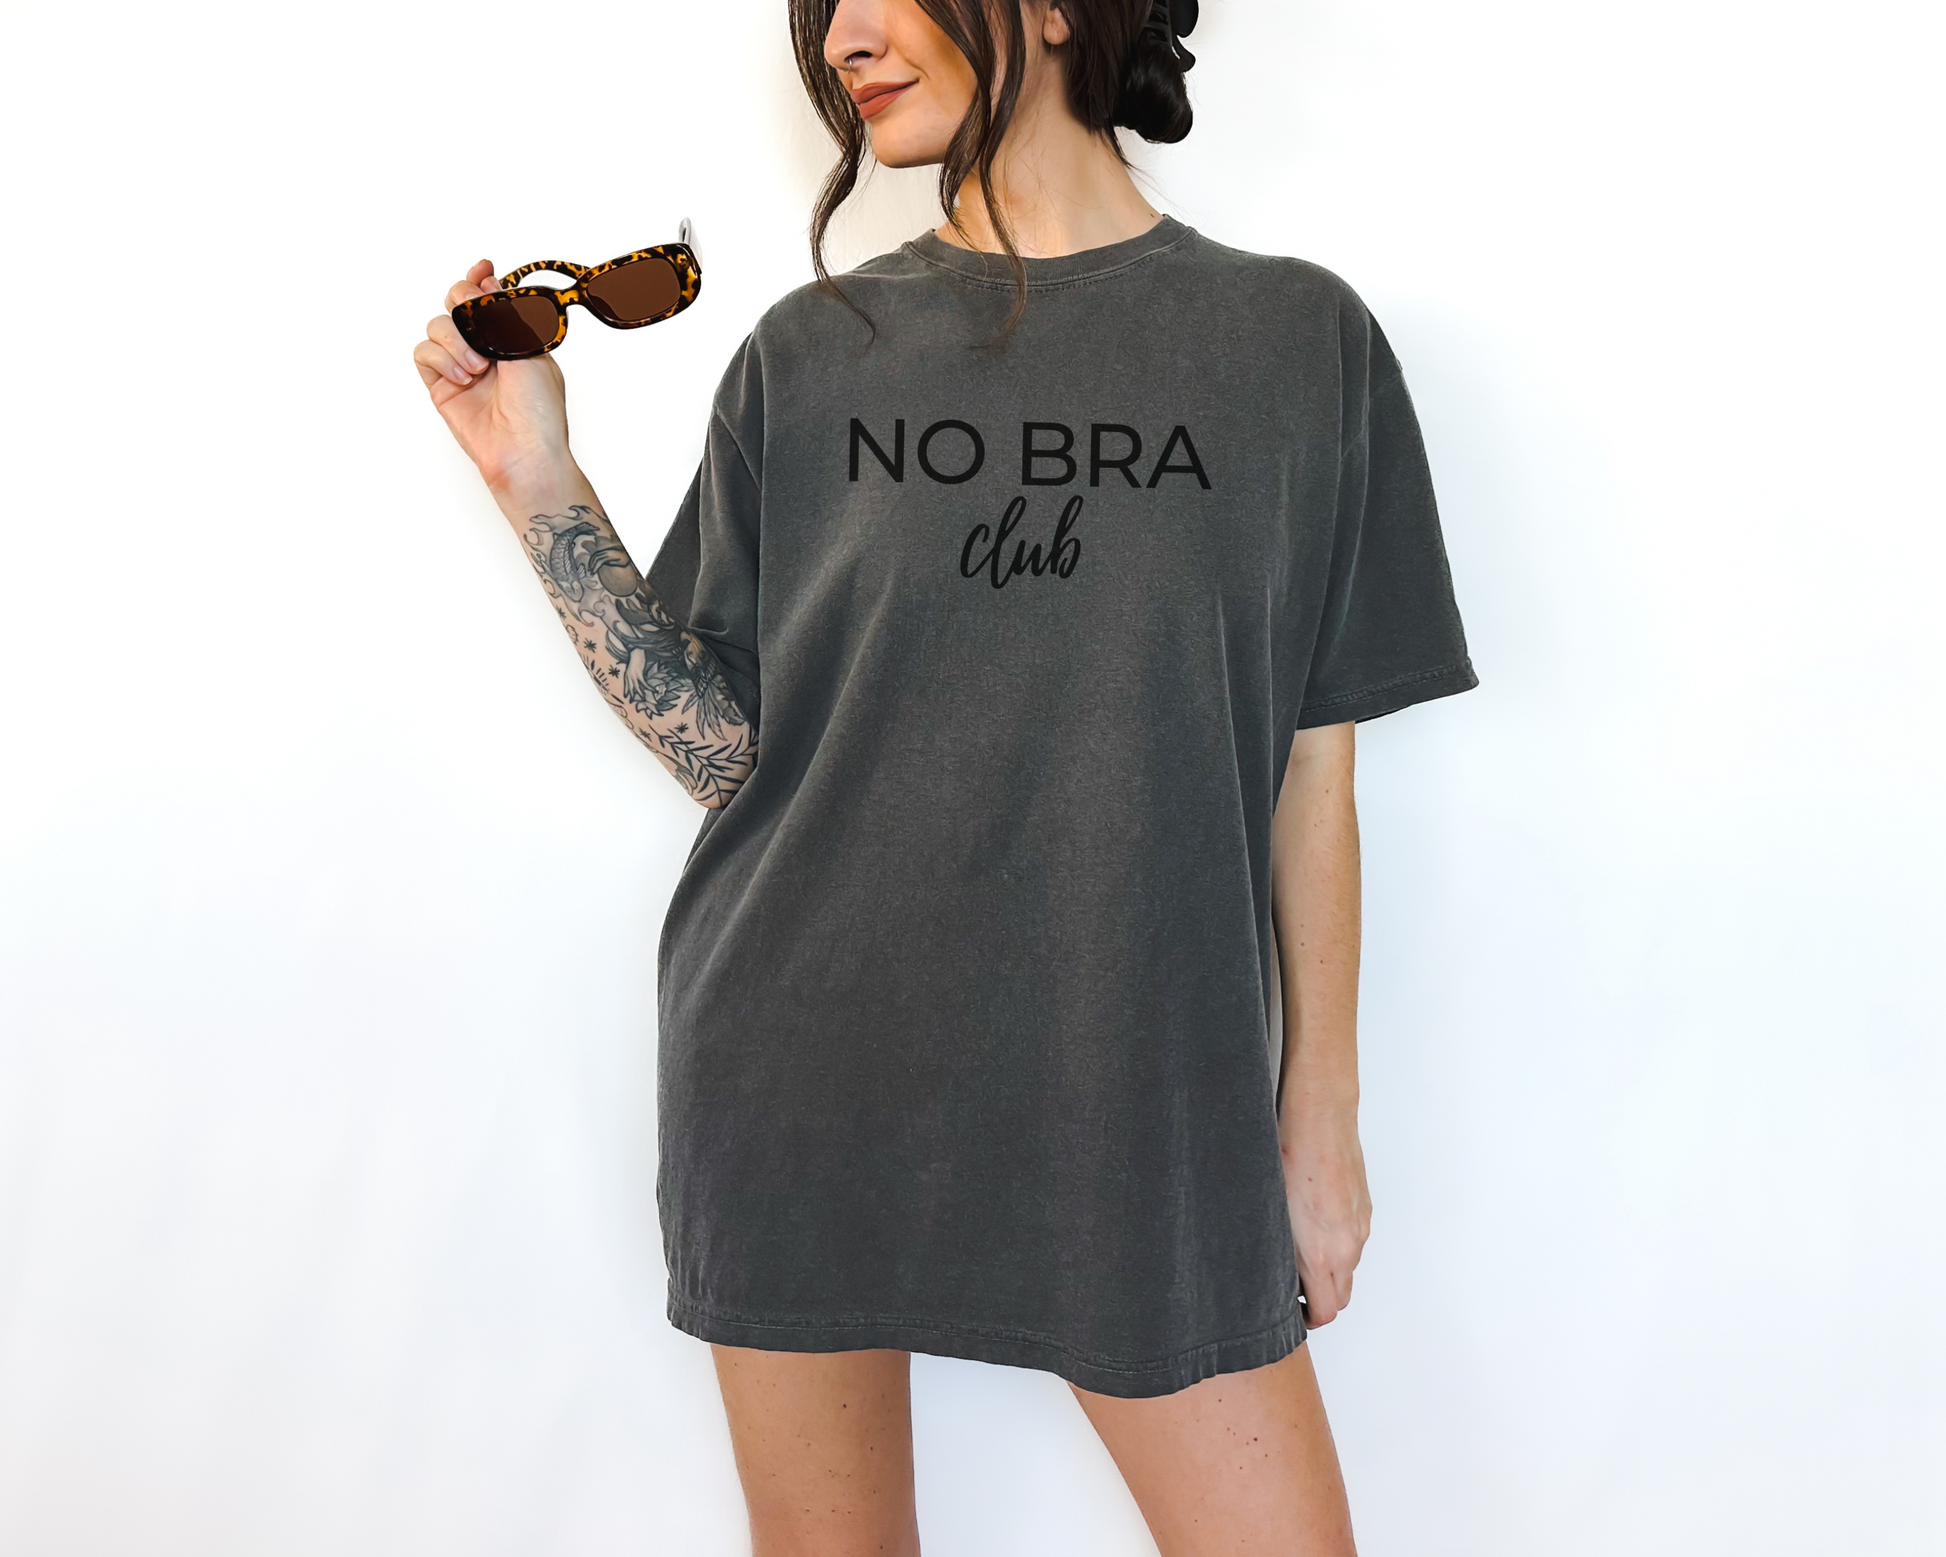 No Bra Club Women's Crop Top Letter Print Shirt Tee Graphic T